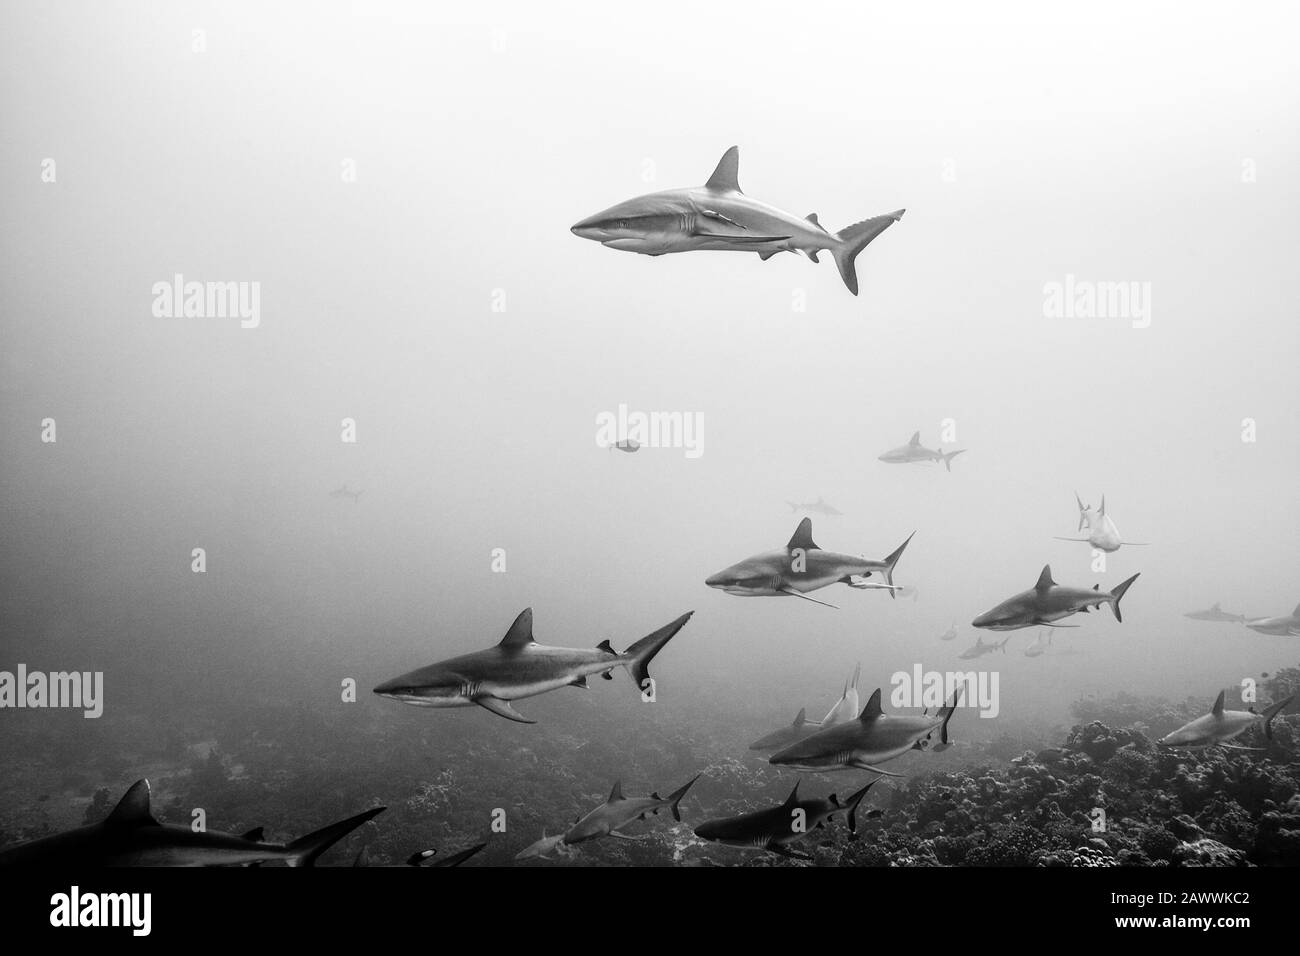 Full length wildlife Black and White Stock Photos & Images - Alamy